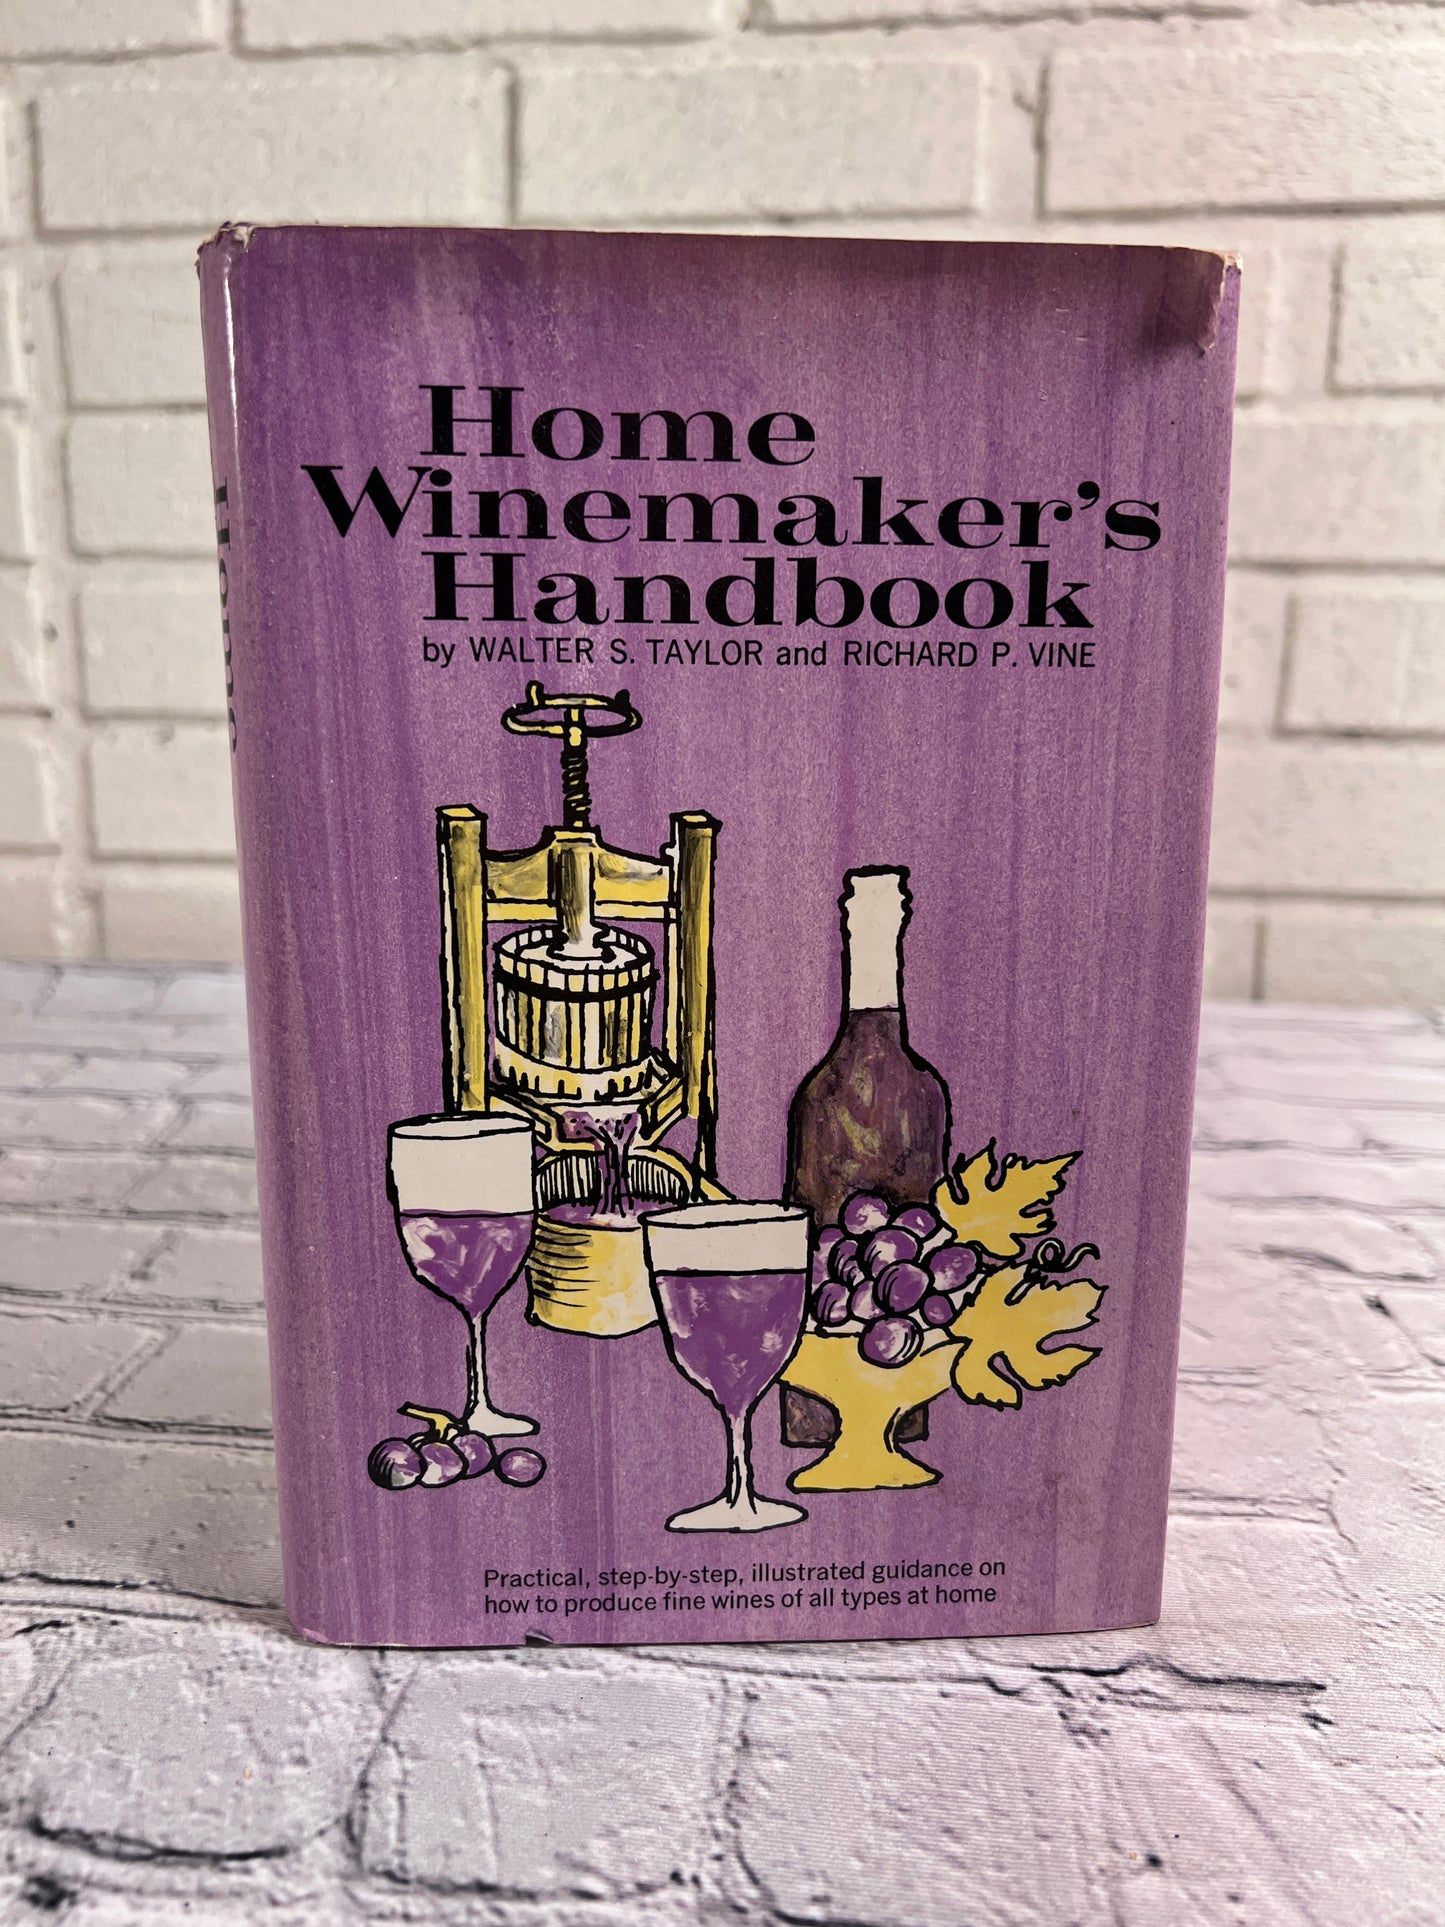 Home Winemaker's Handbook by Walter S. Taylor & Richard P. Vine [1968]